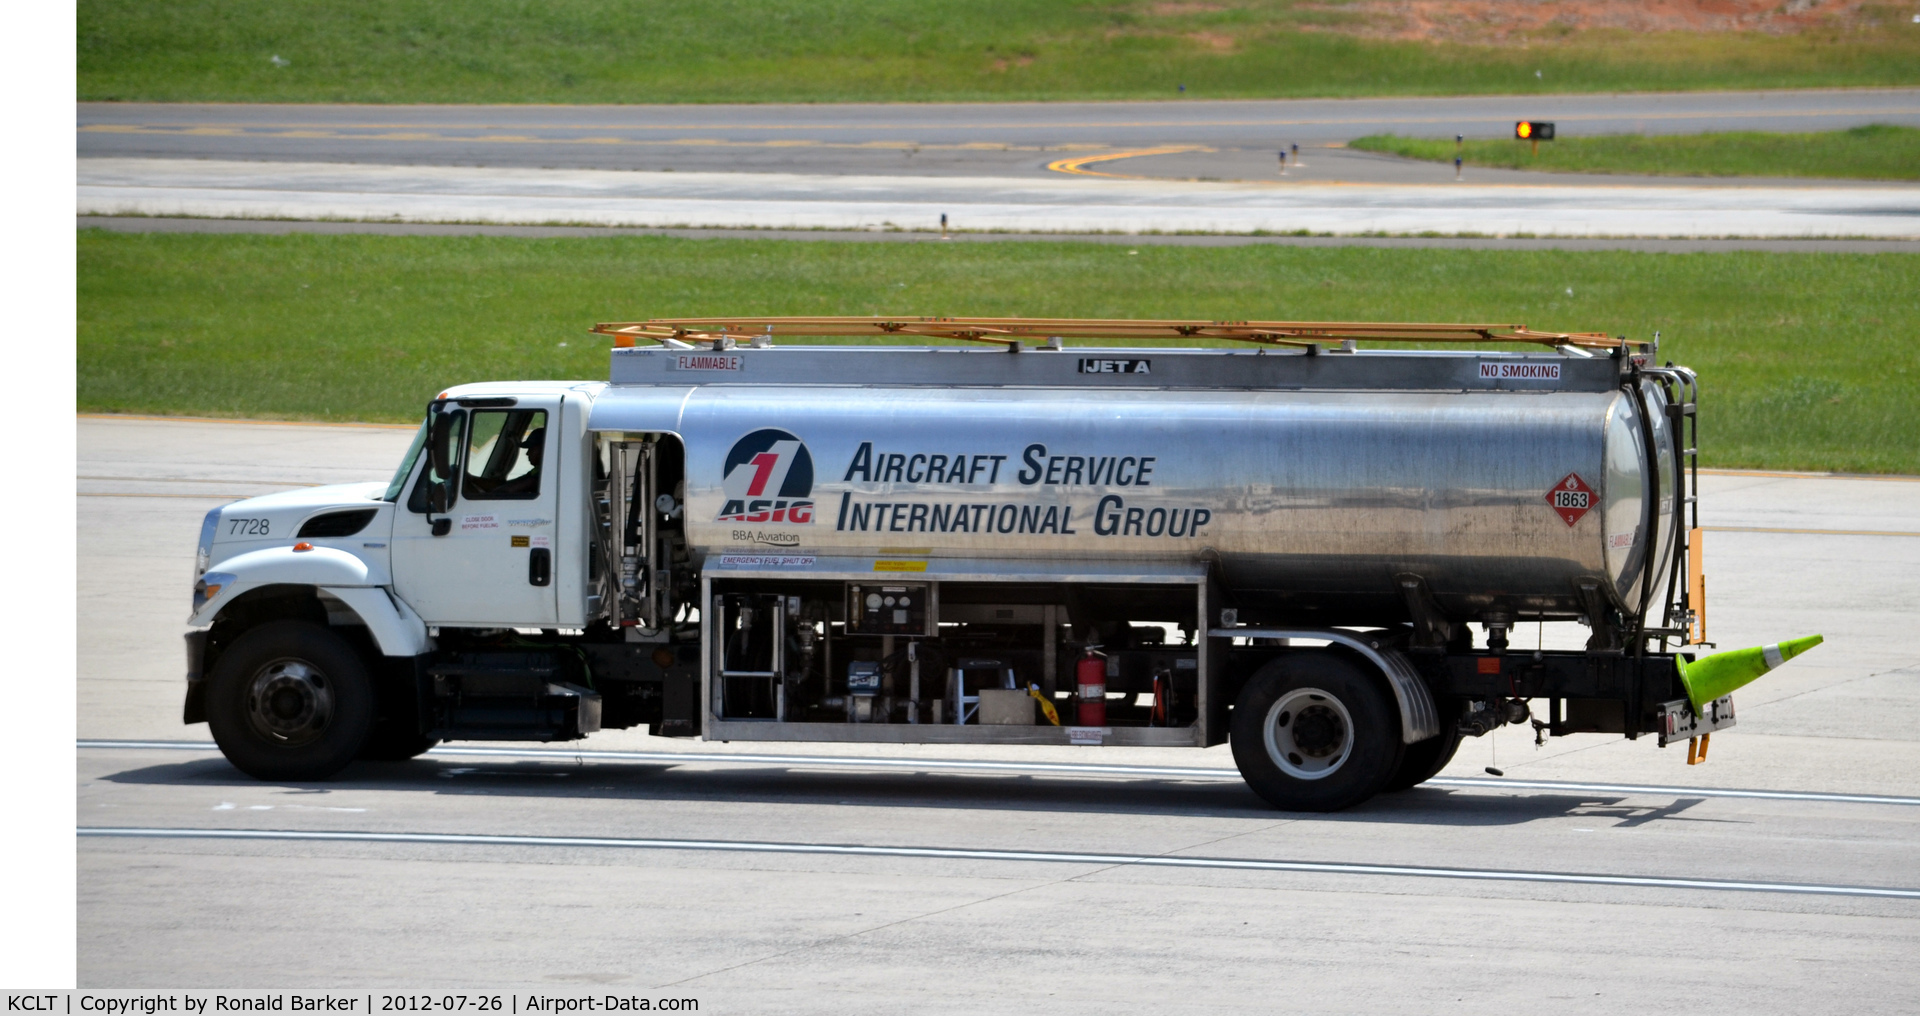 Charlotte/douglas International Airport (CLT) - Fuel Truck